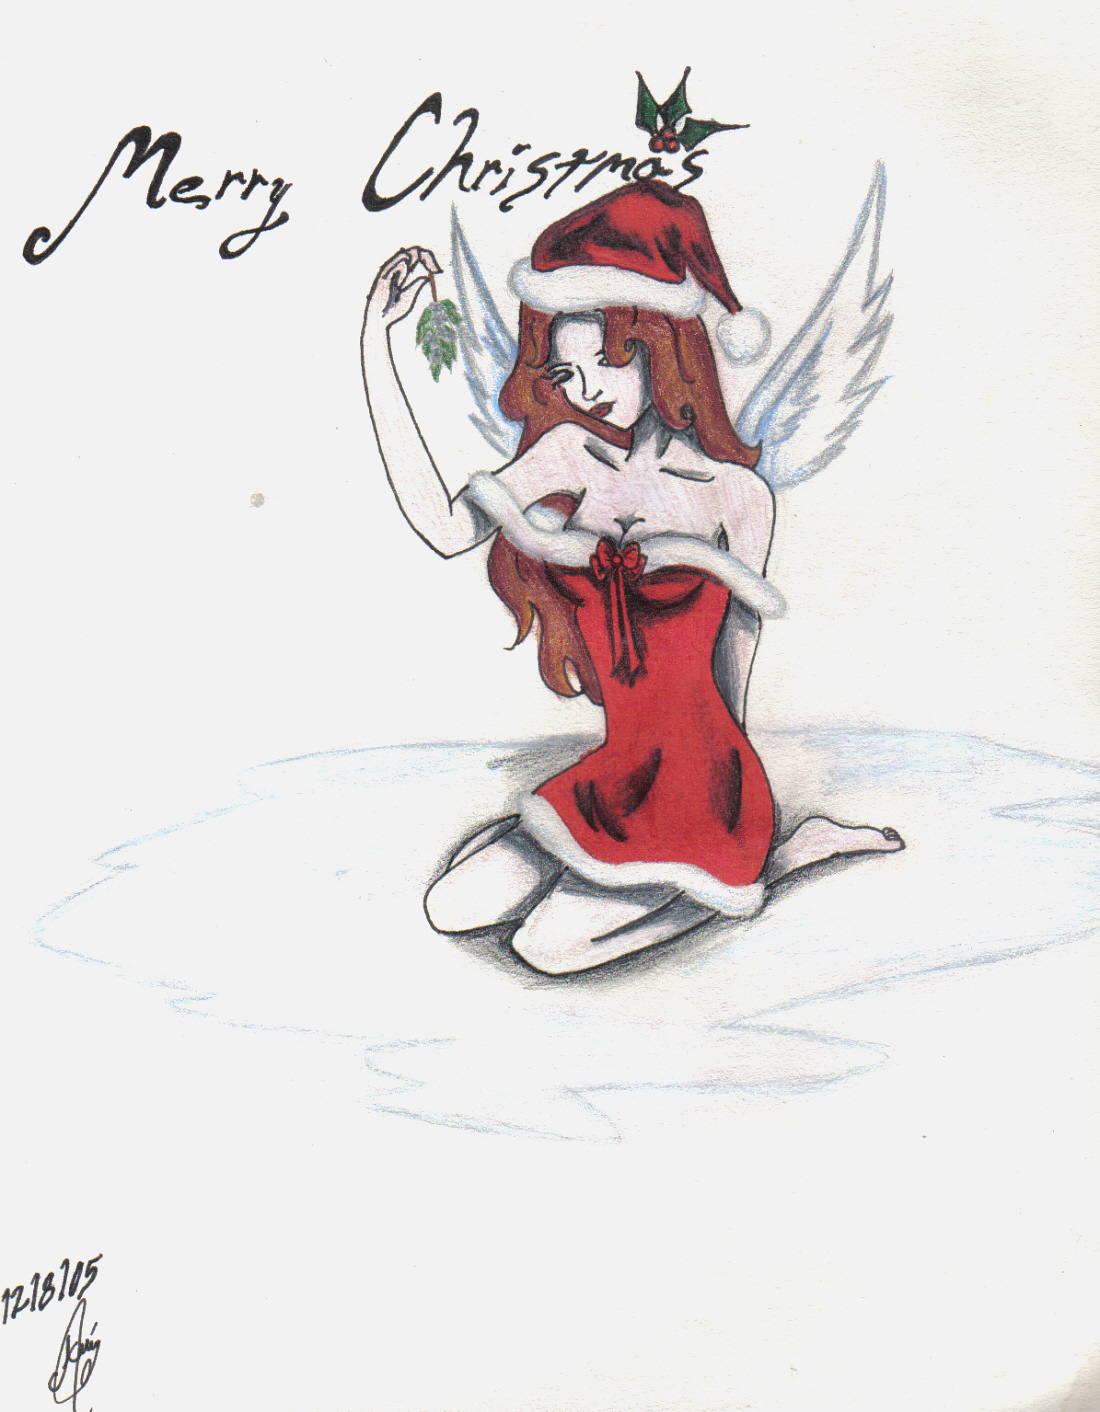 Merry Christmas by sesshy4189